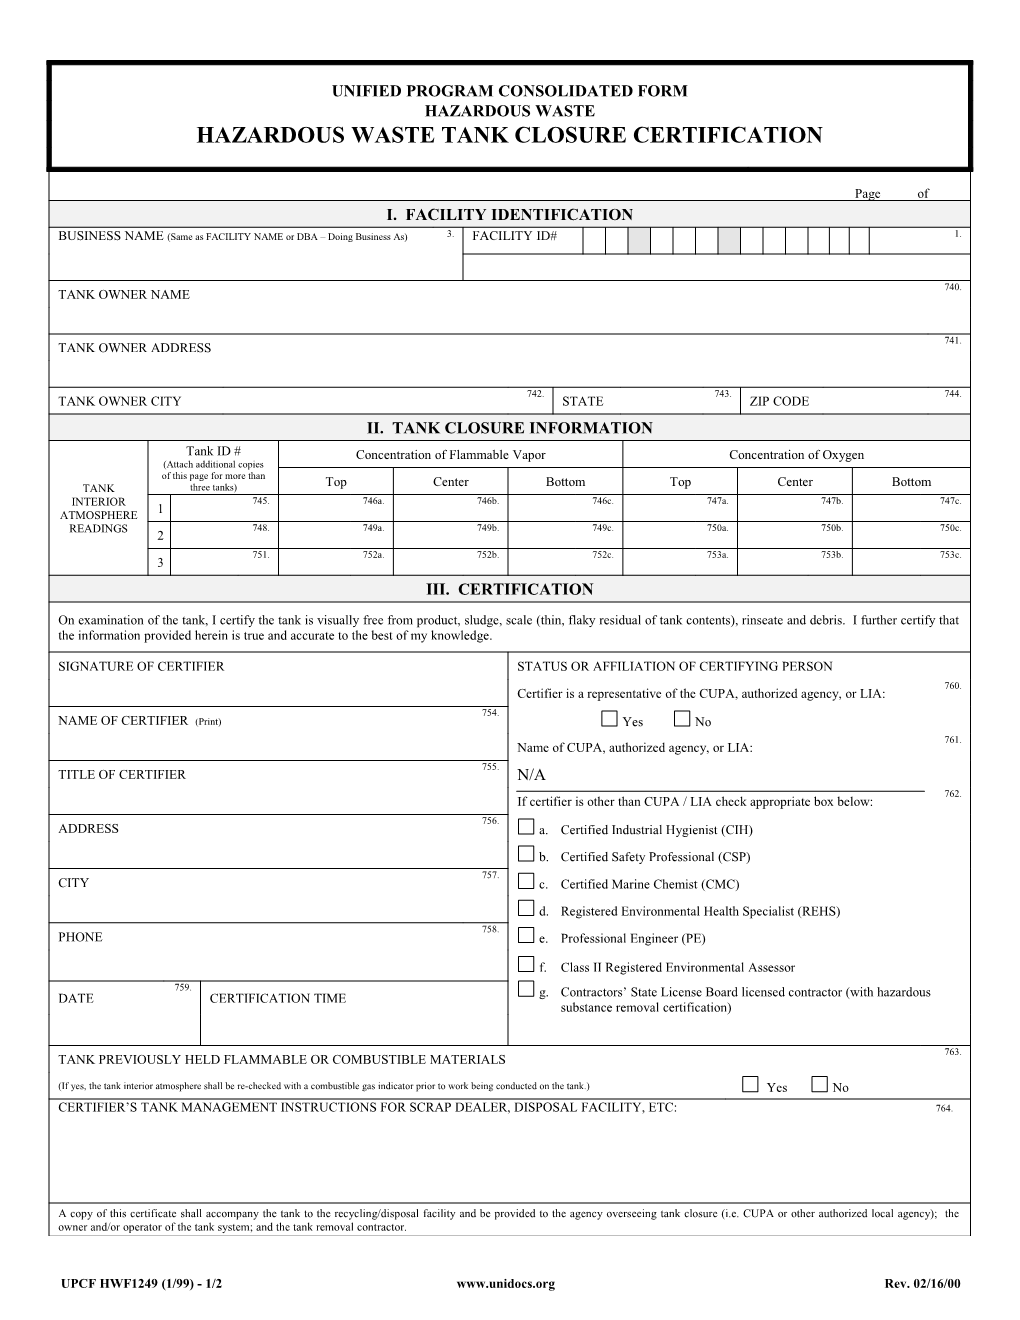 UPCF Hazwaste Tank Closure Certification Form